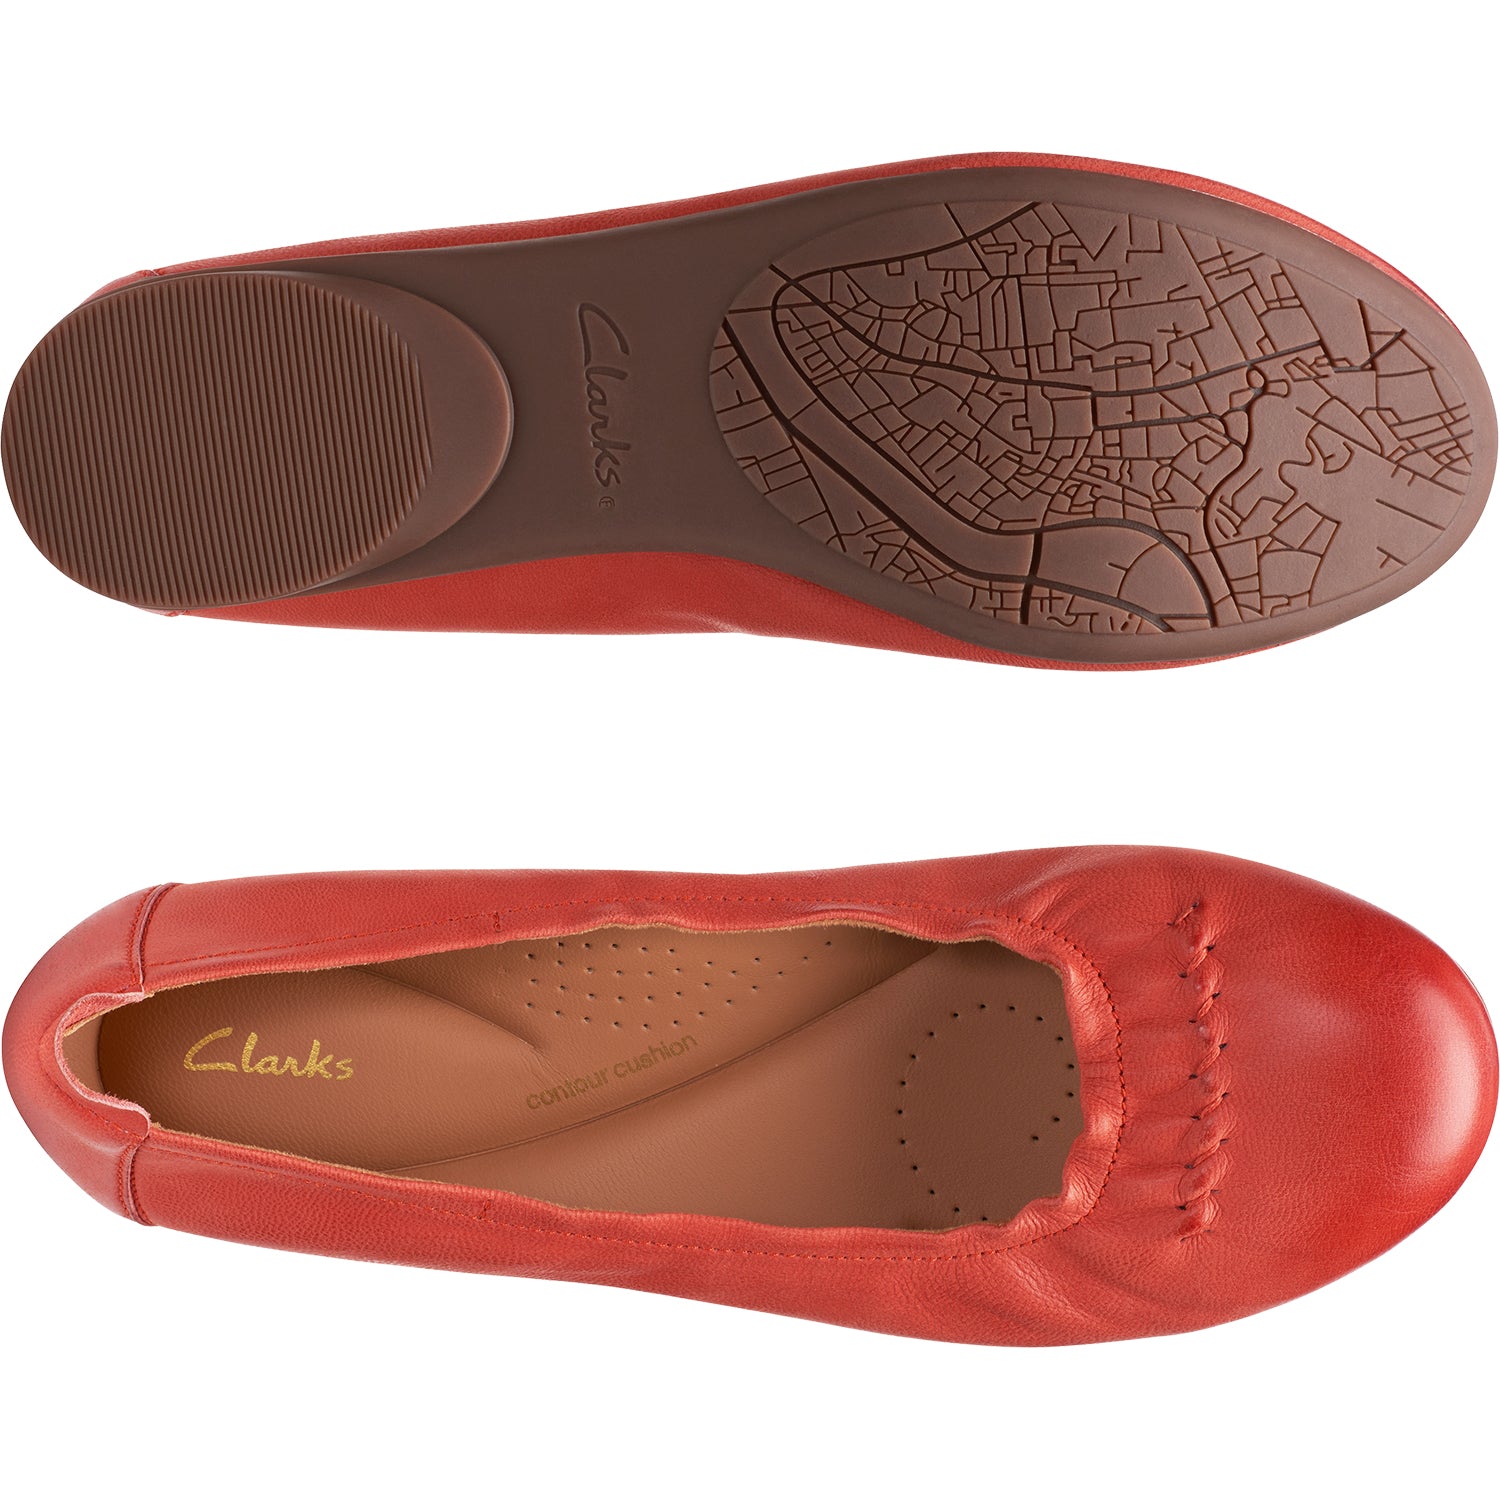 Clarks Rena Hop Grenadine | Women's Slip-On Flats | Footwear etc.